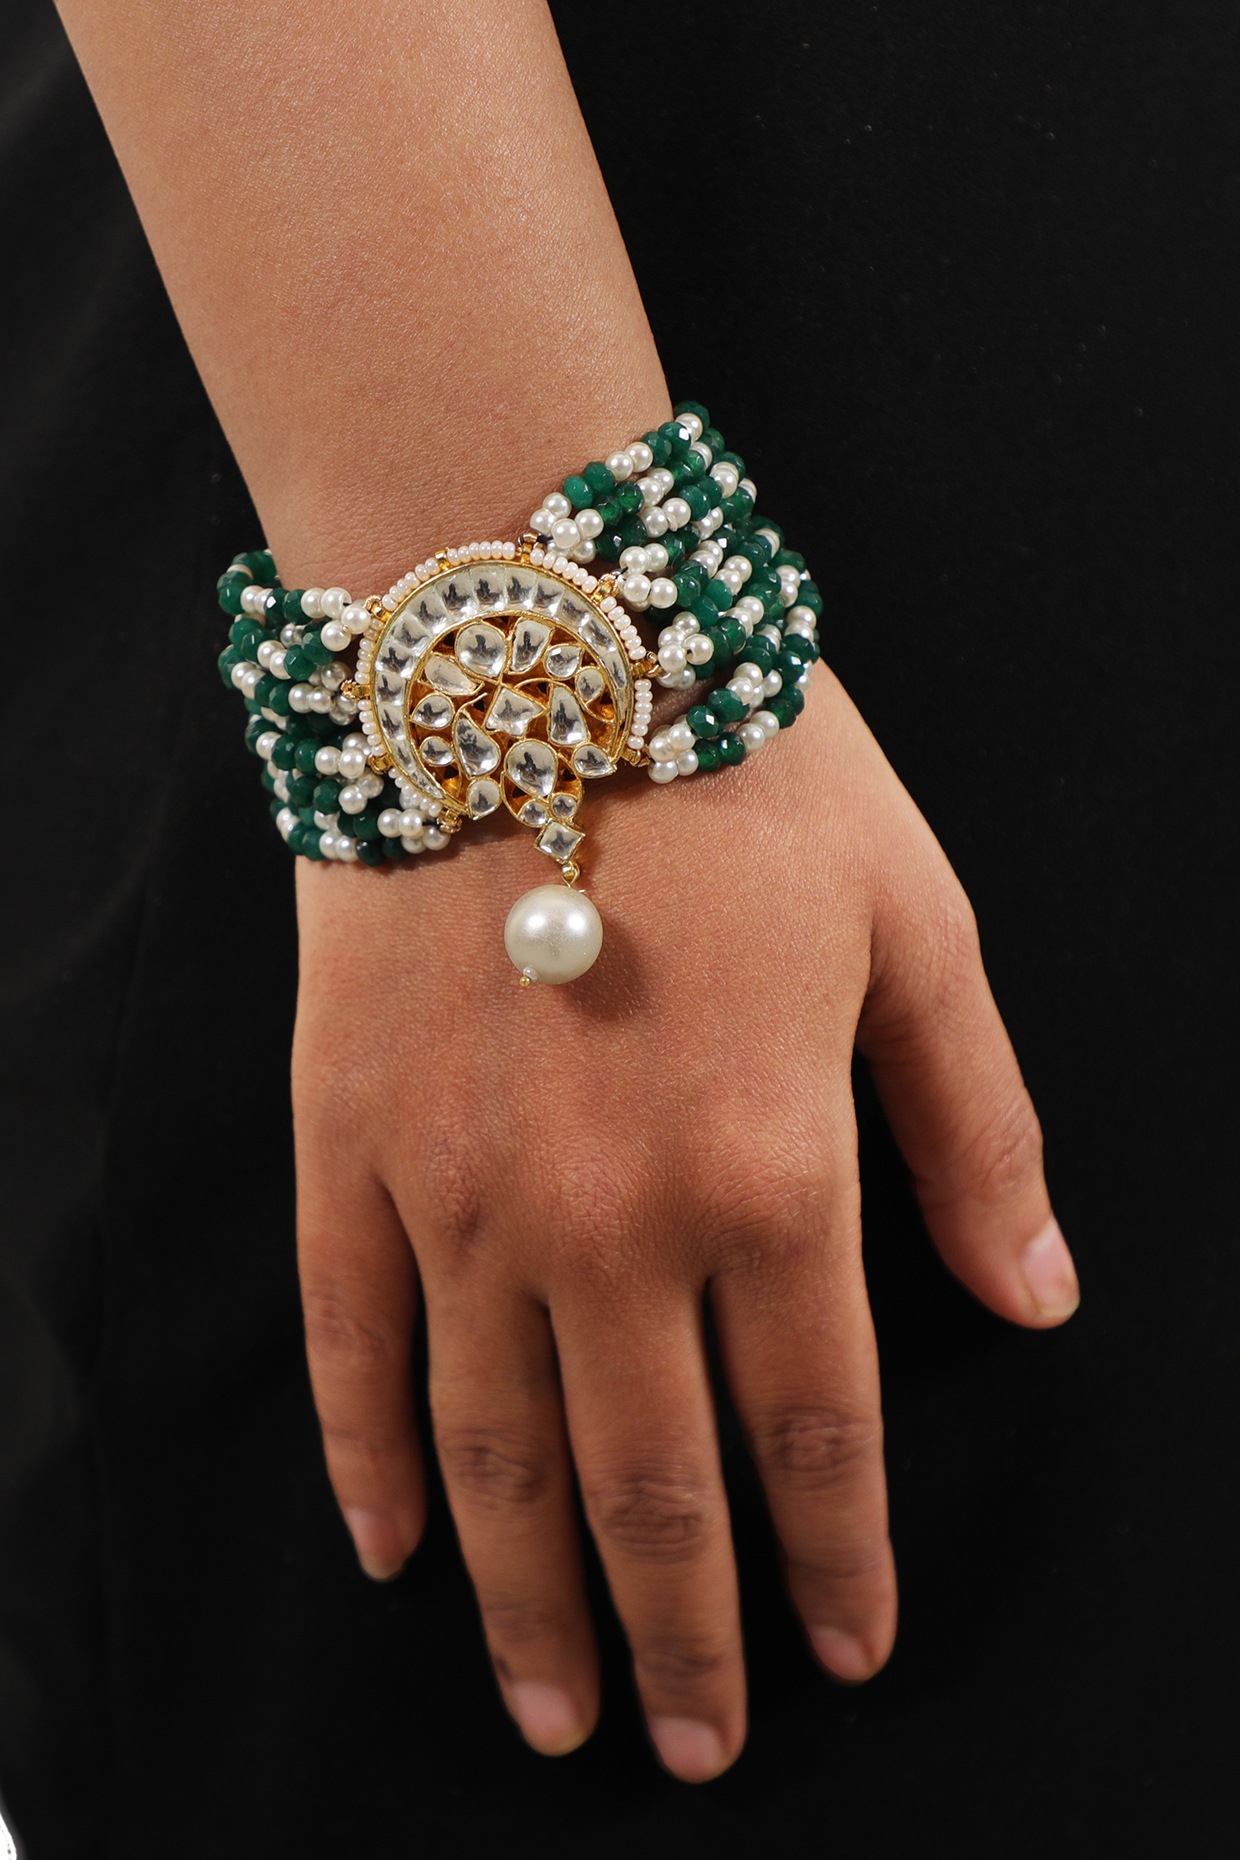 22K Gold Bracelet For Women with Pearls (Mutyam) - 235-GBR3270 in 4.900  Grams